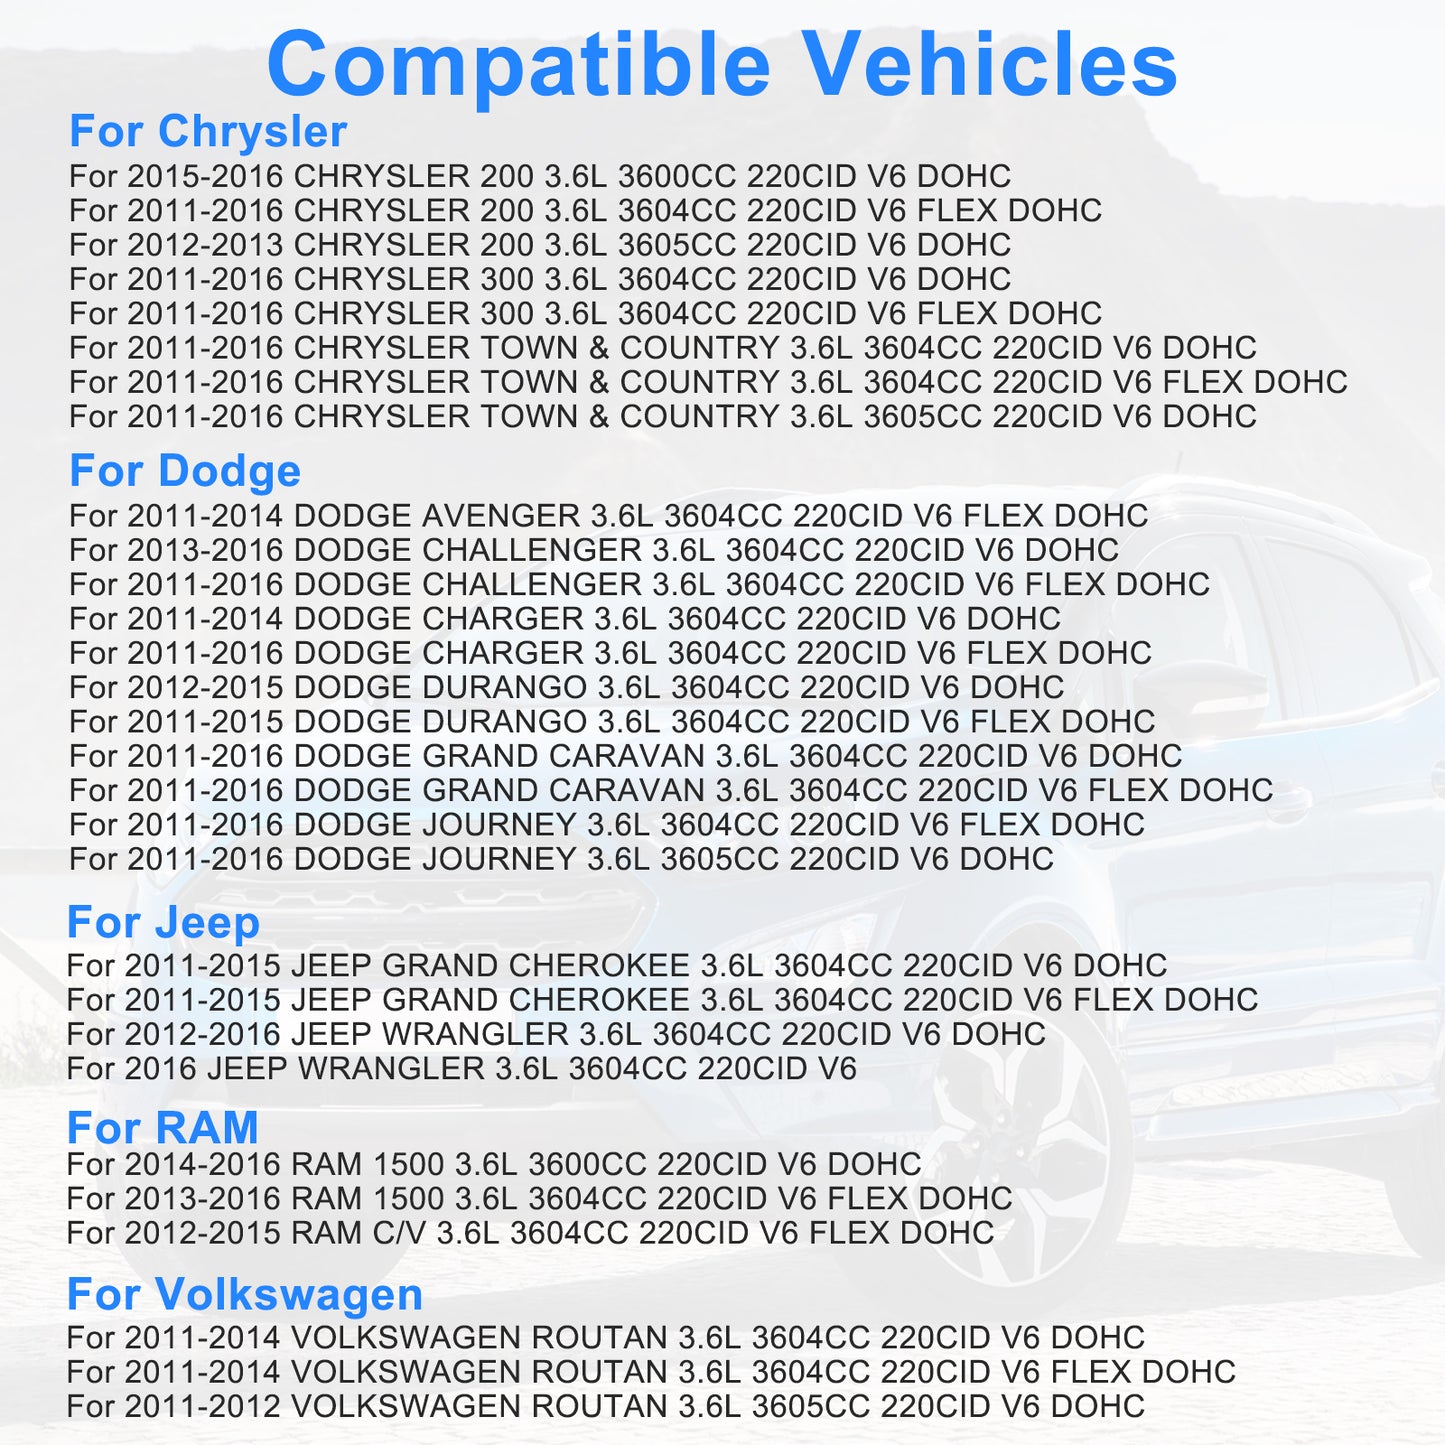 VS50805R Valve Cover Gasket Kit - for 11-16 Chrysler, Dodge, Ram, & Volkswagen 3.6L DOHC 24V Engines